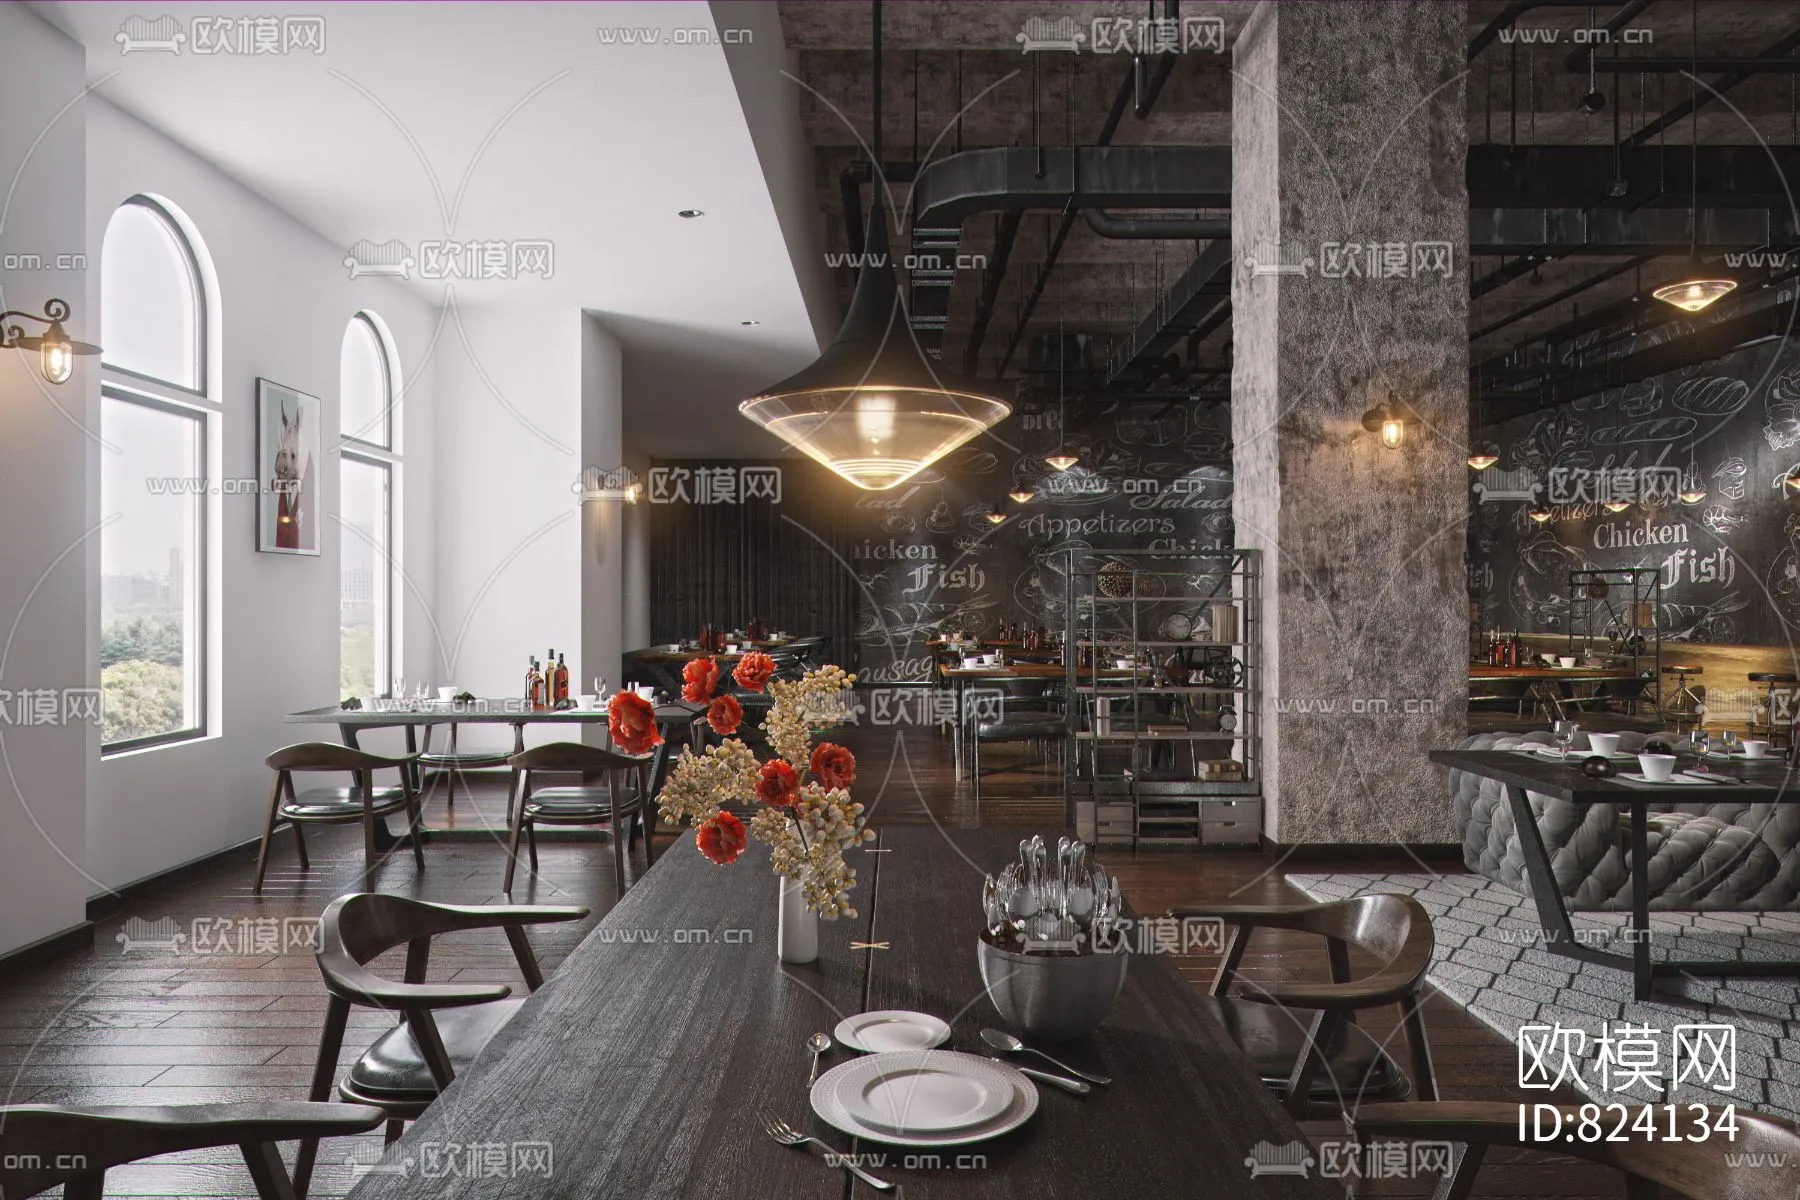 Restaurant 3D Scenes – 0720